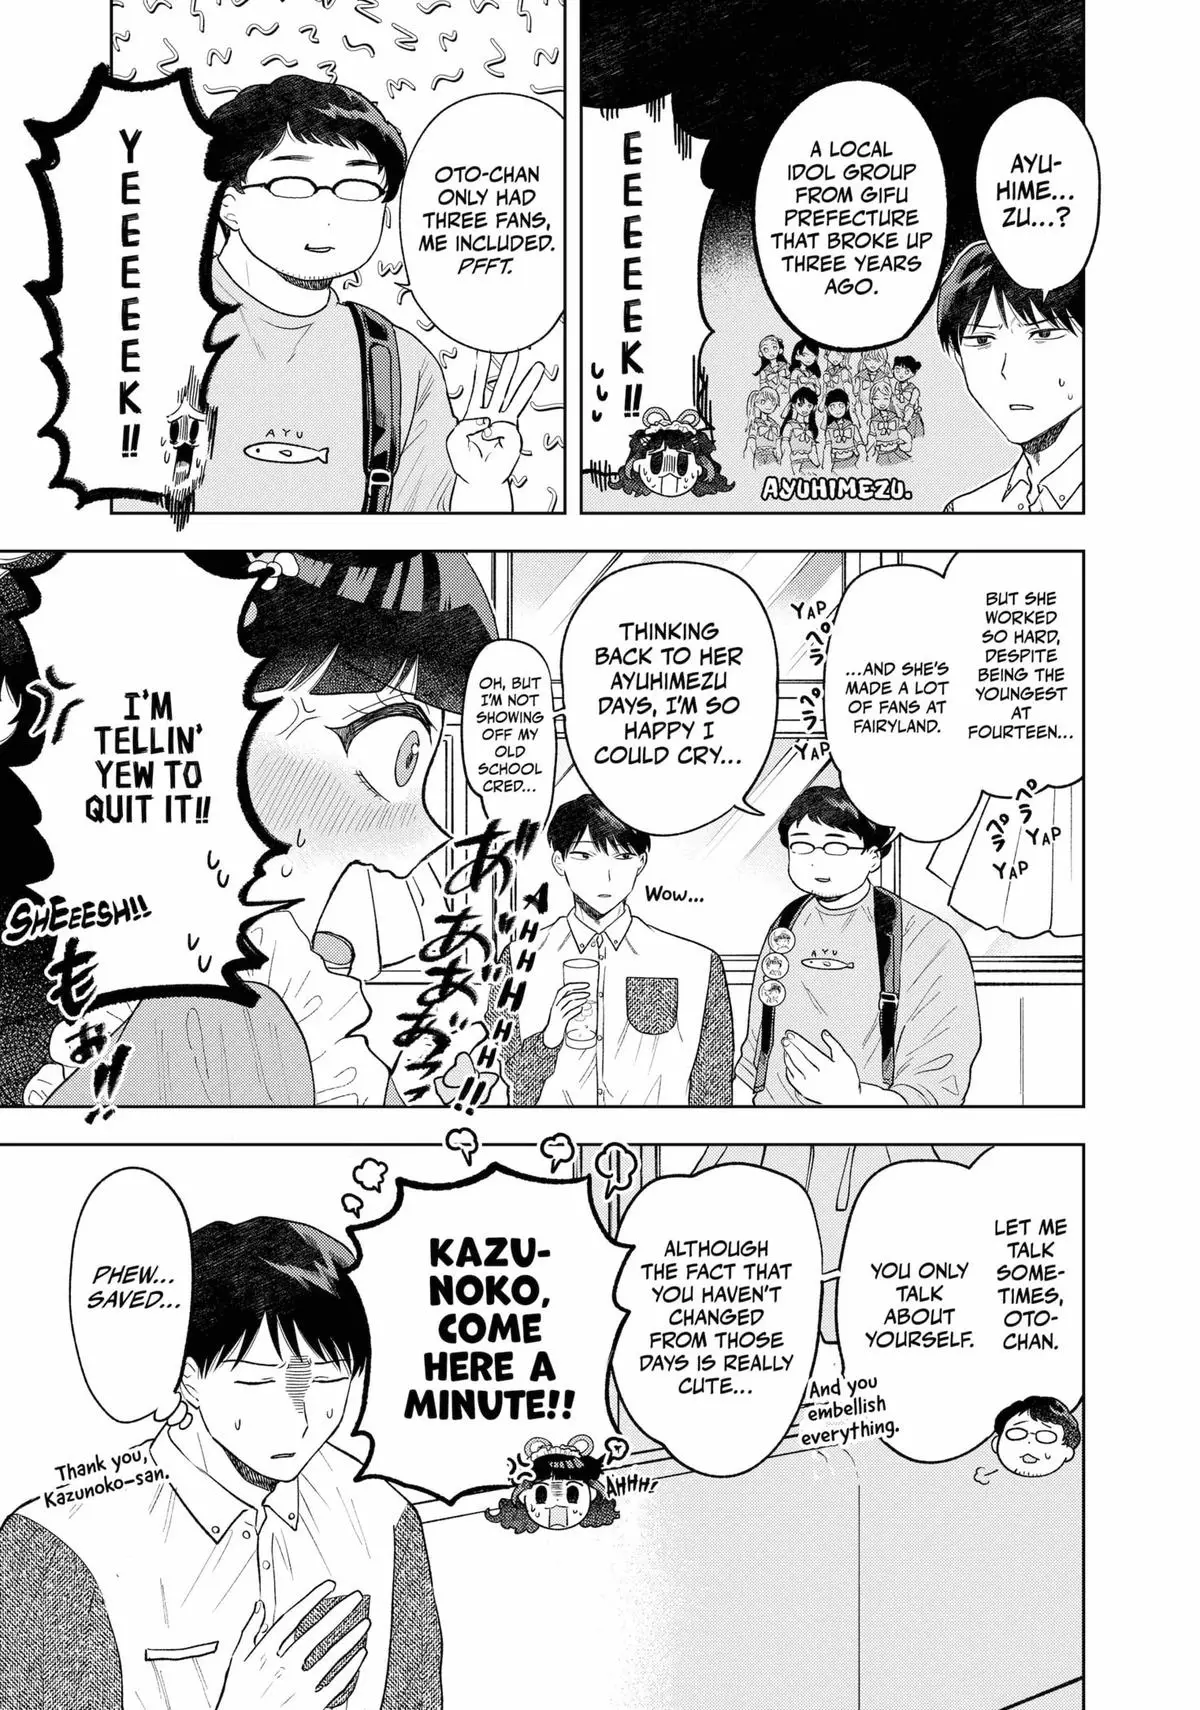 Tsuruko Returns The Favor - 5 page 15-70a26938